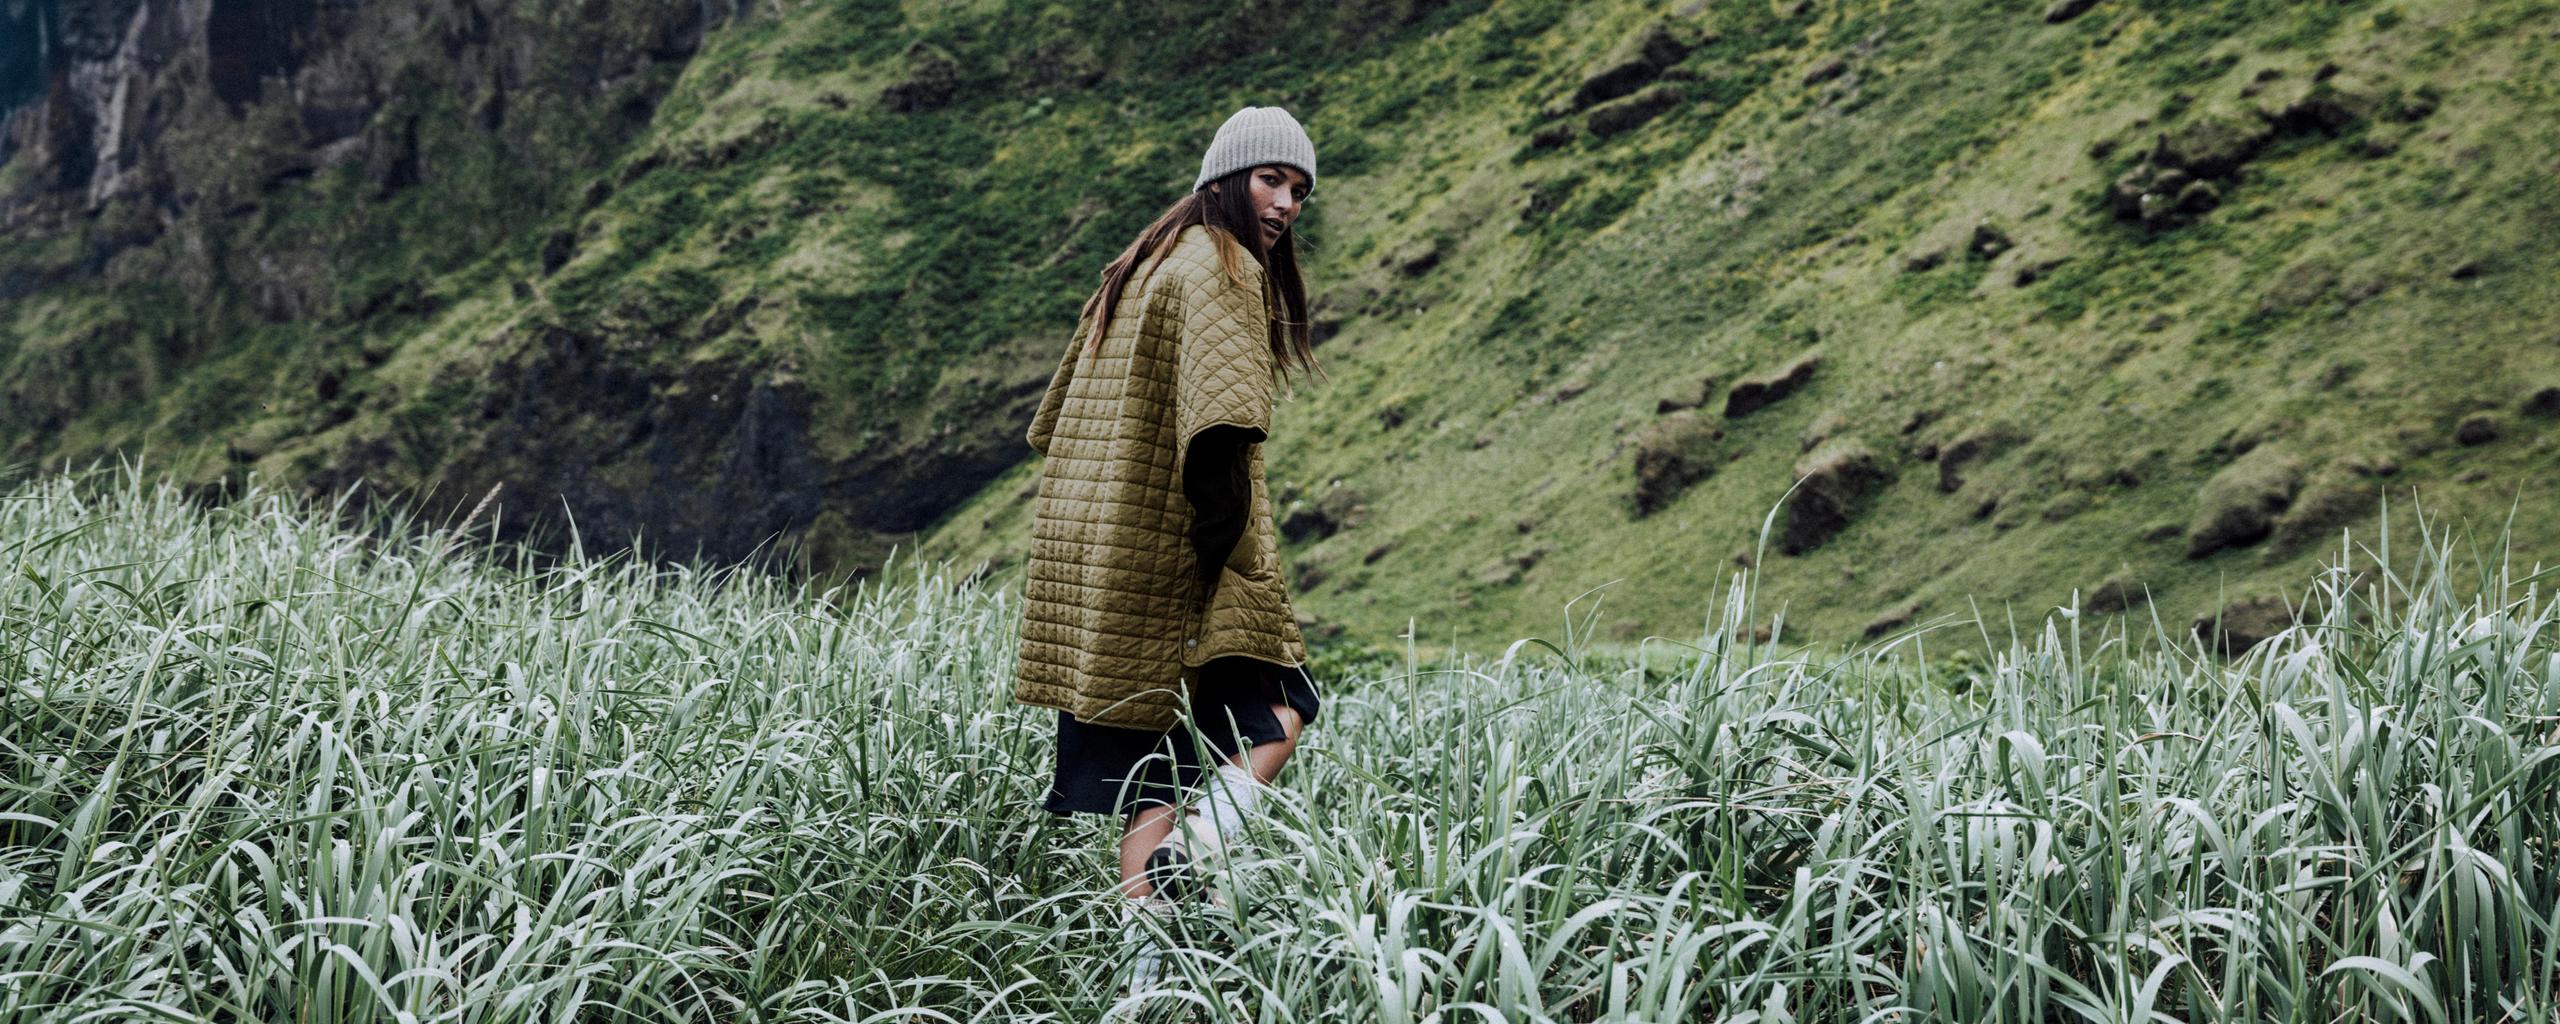 Woman walking through tall grass next to mountain in Iceland